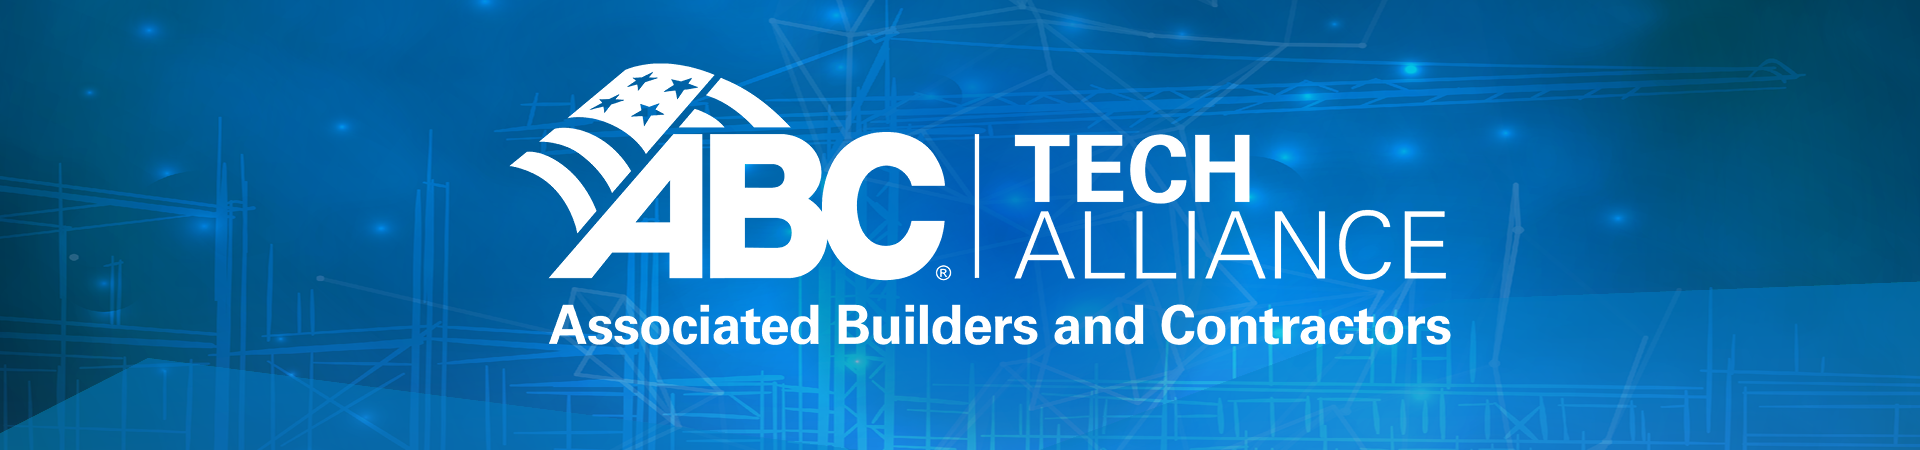 ABC TECH Alliance Safety Evolution